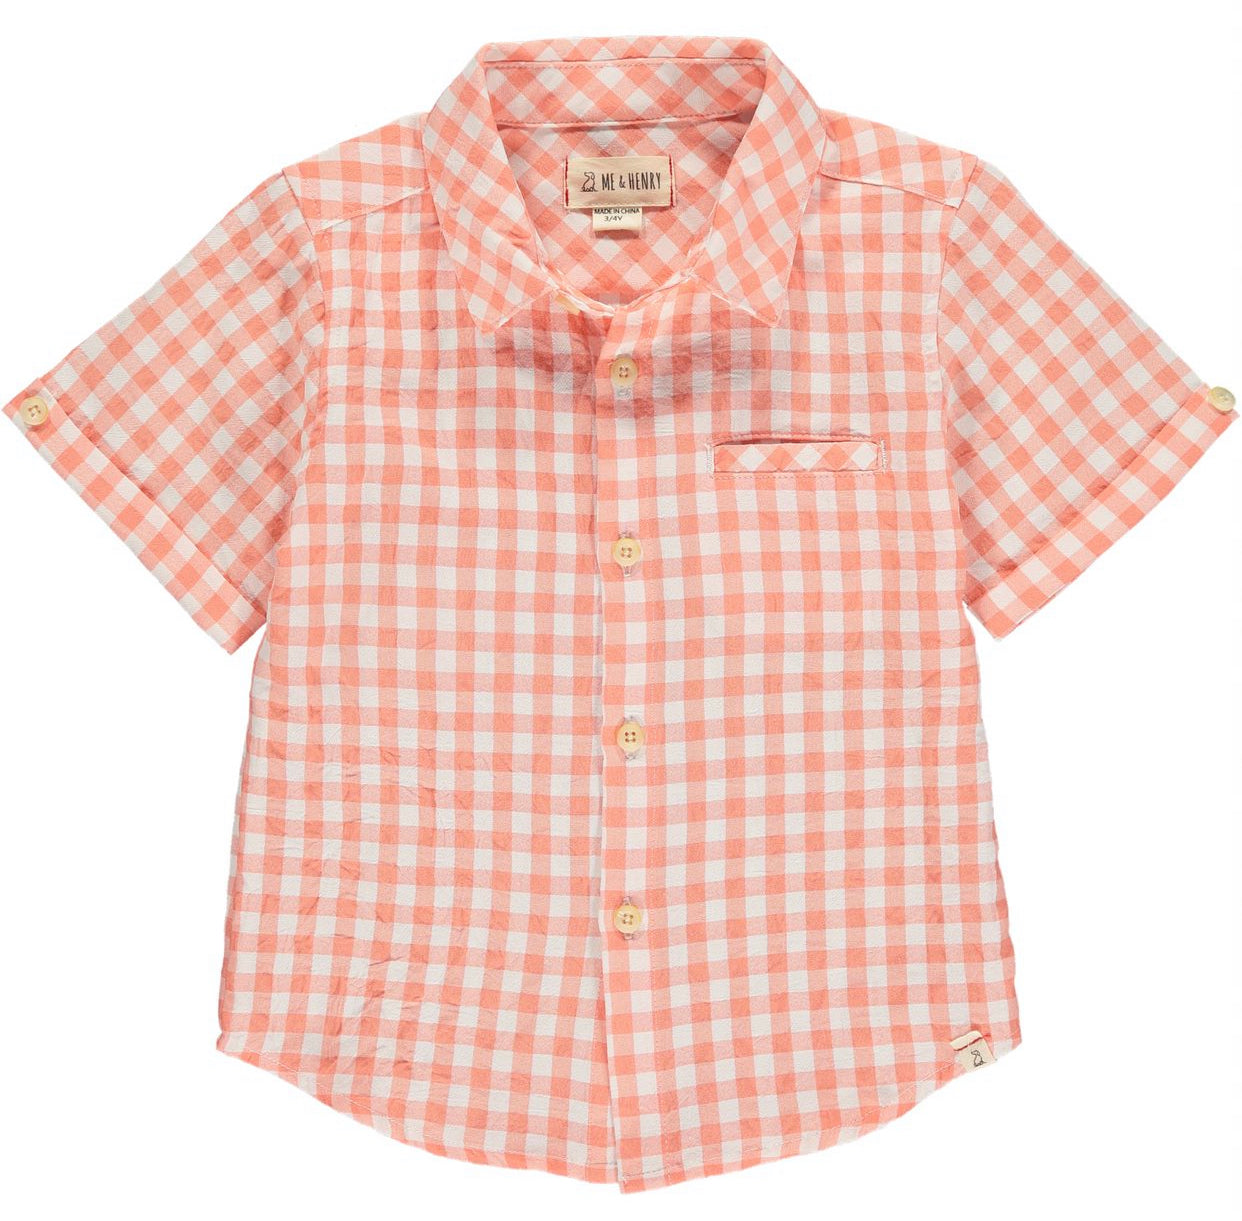 Apricot Plaid Button Up Shirt